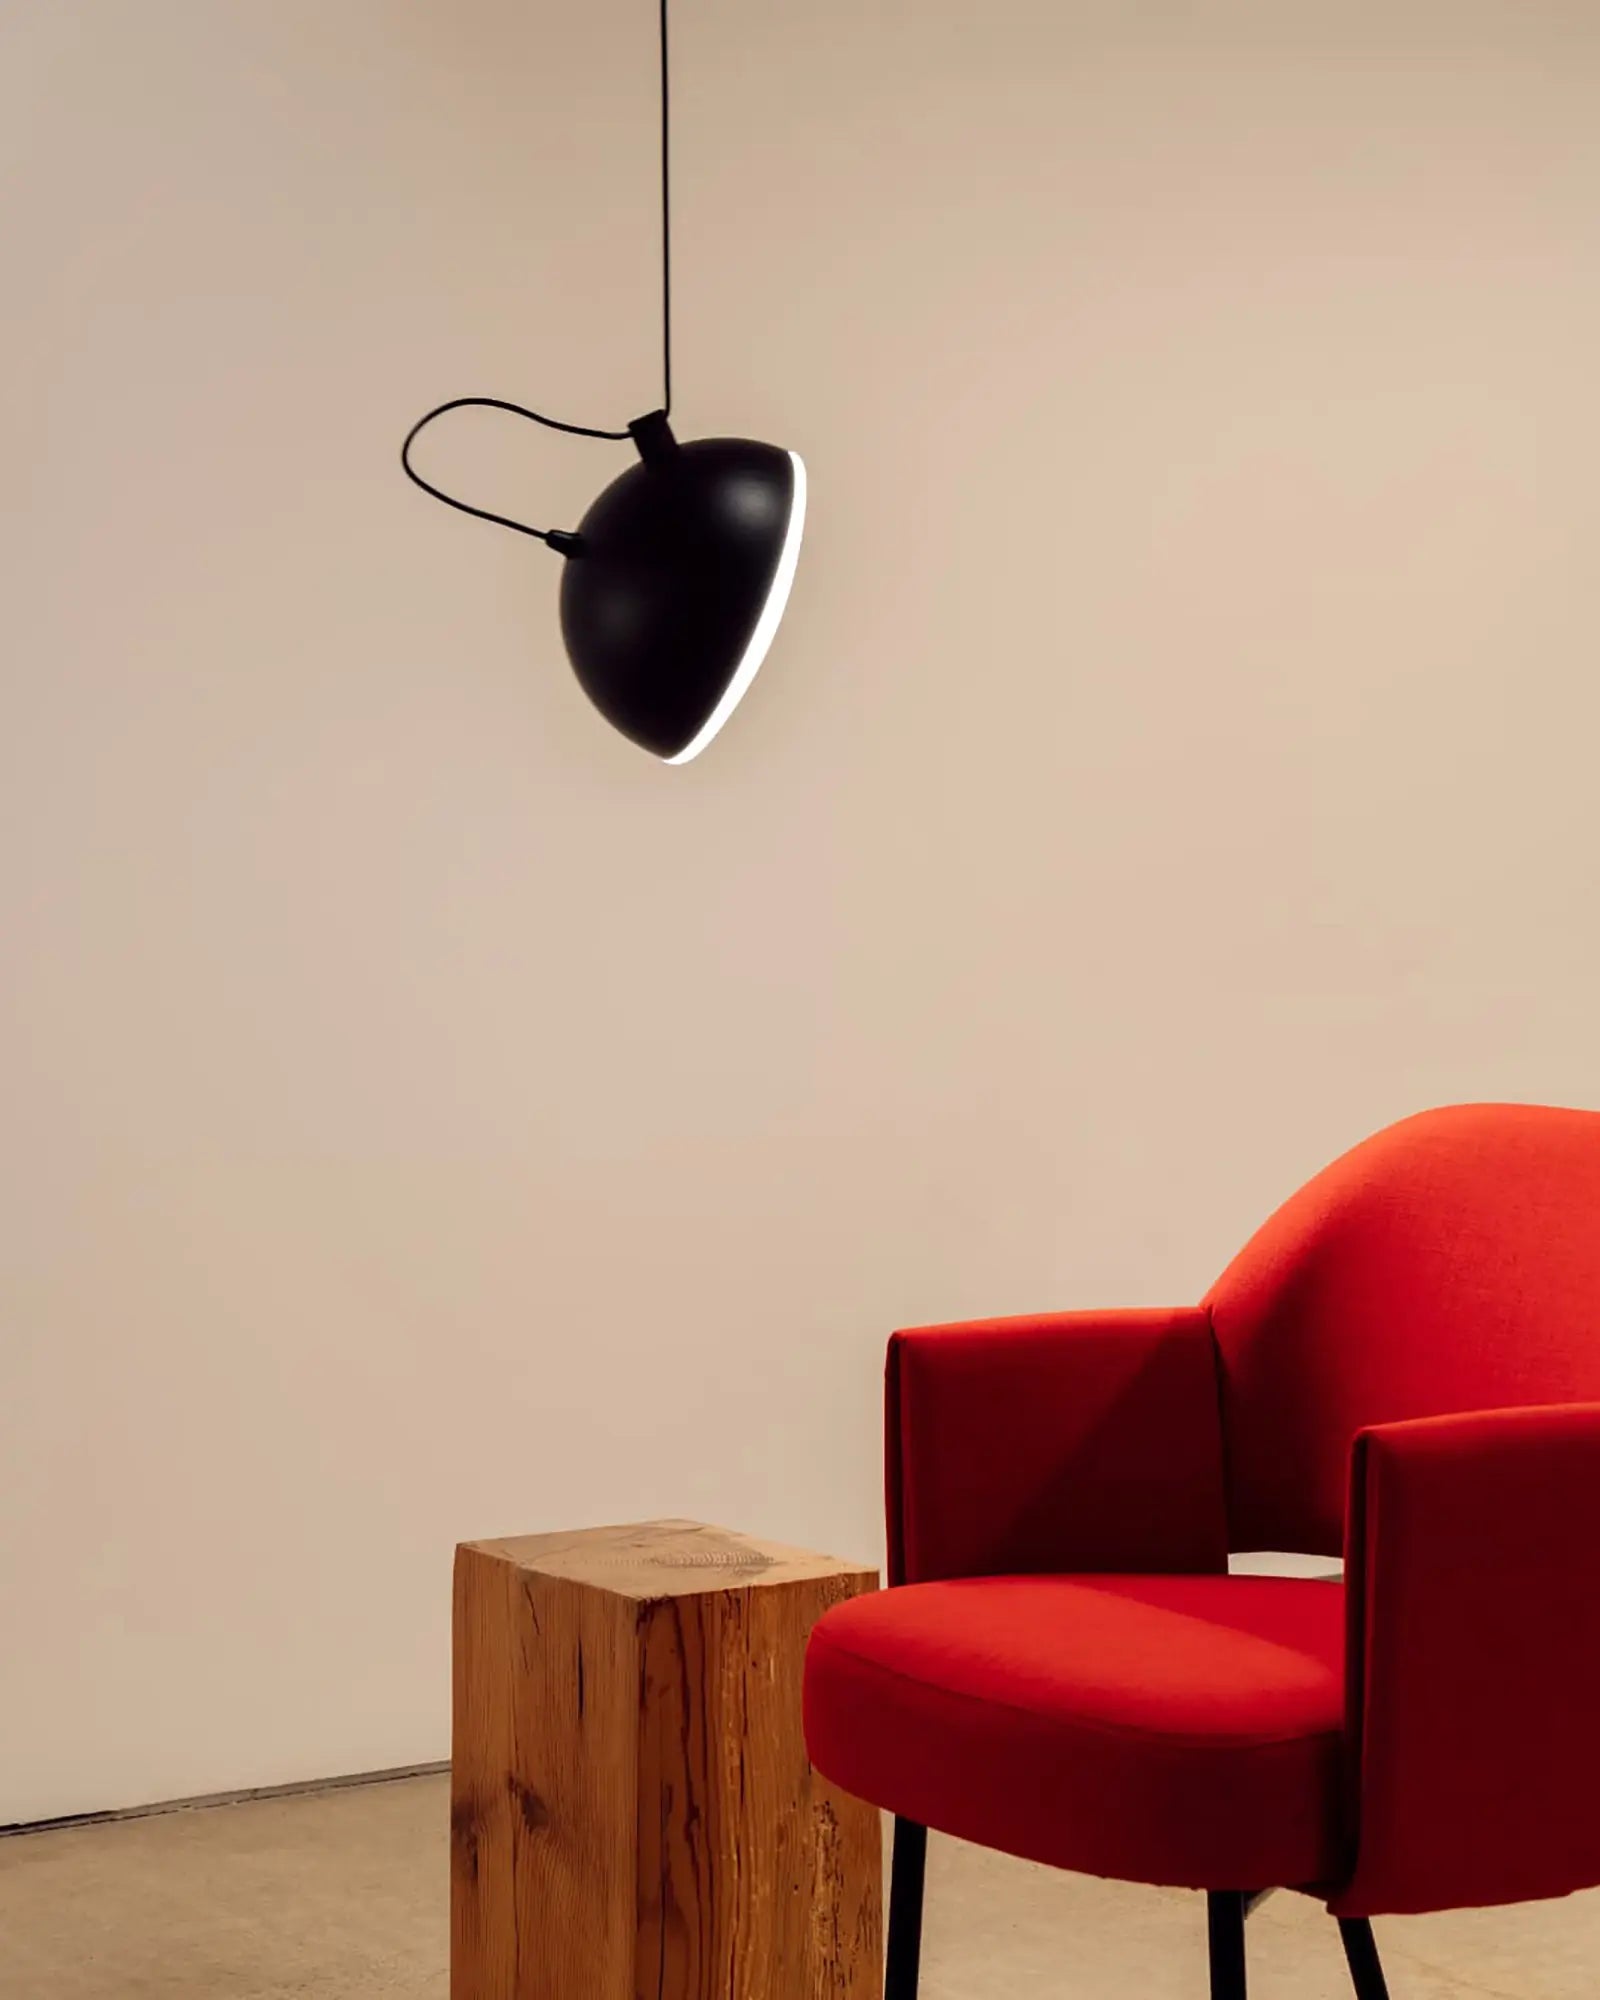 Nod pendant light above a reading chair